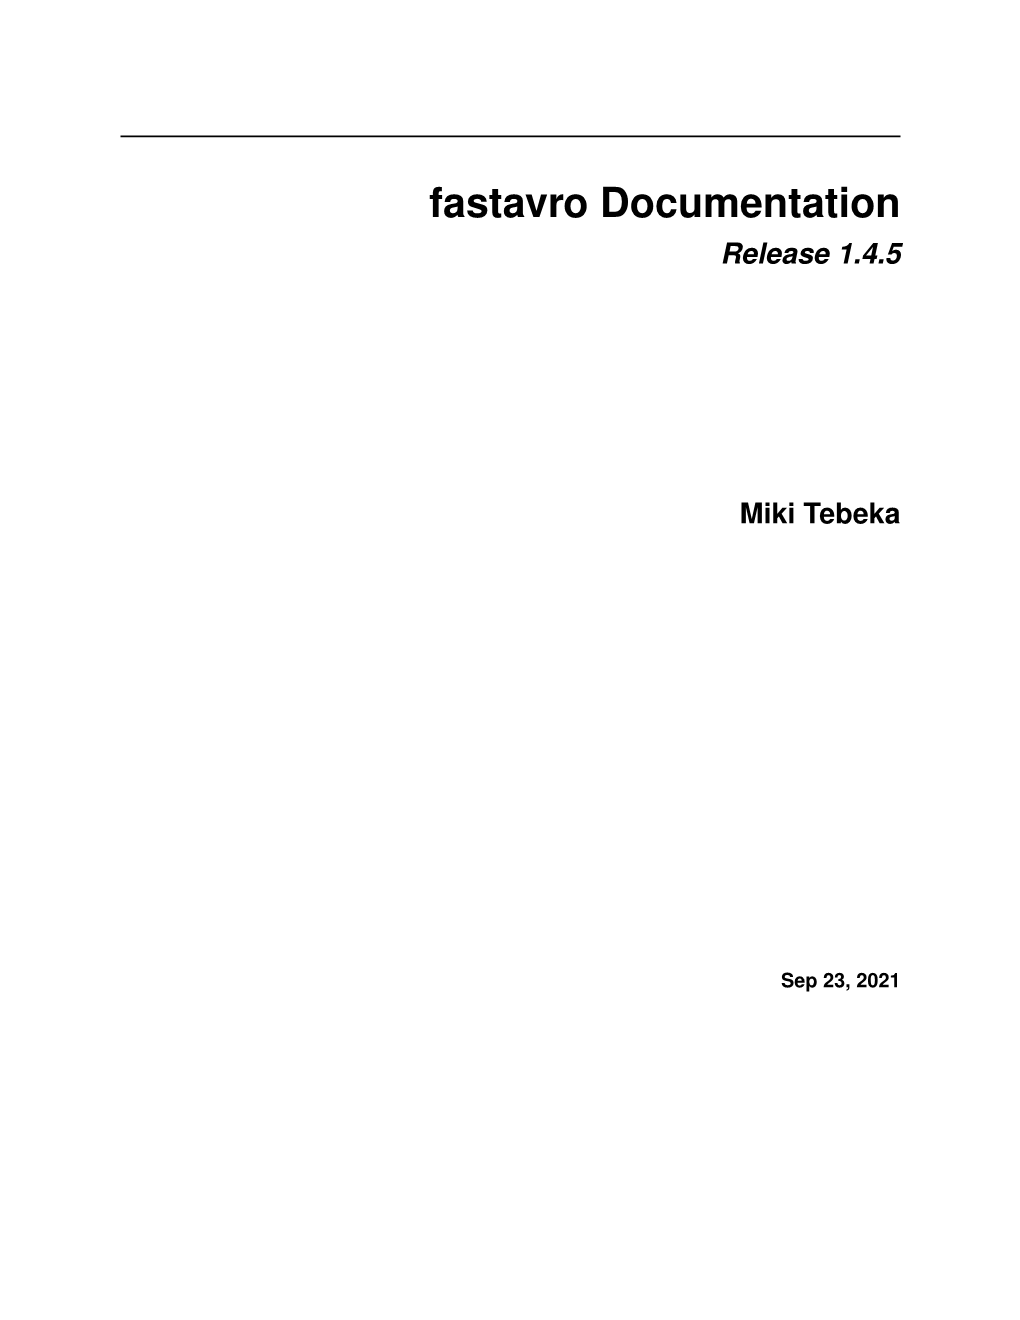 Fastavro Documentation Release 1.4.5